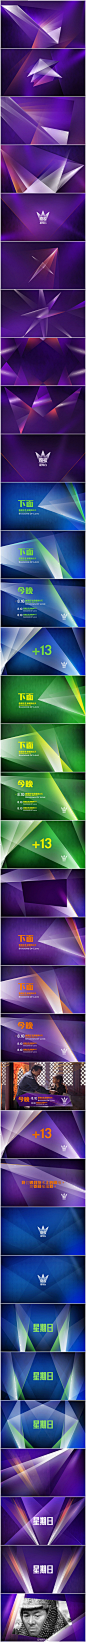 电影台频道包装设计-STAR CHINESE MOVIE LEGENDS。More：http://t.cn/zTbg417 